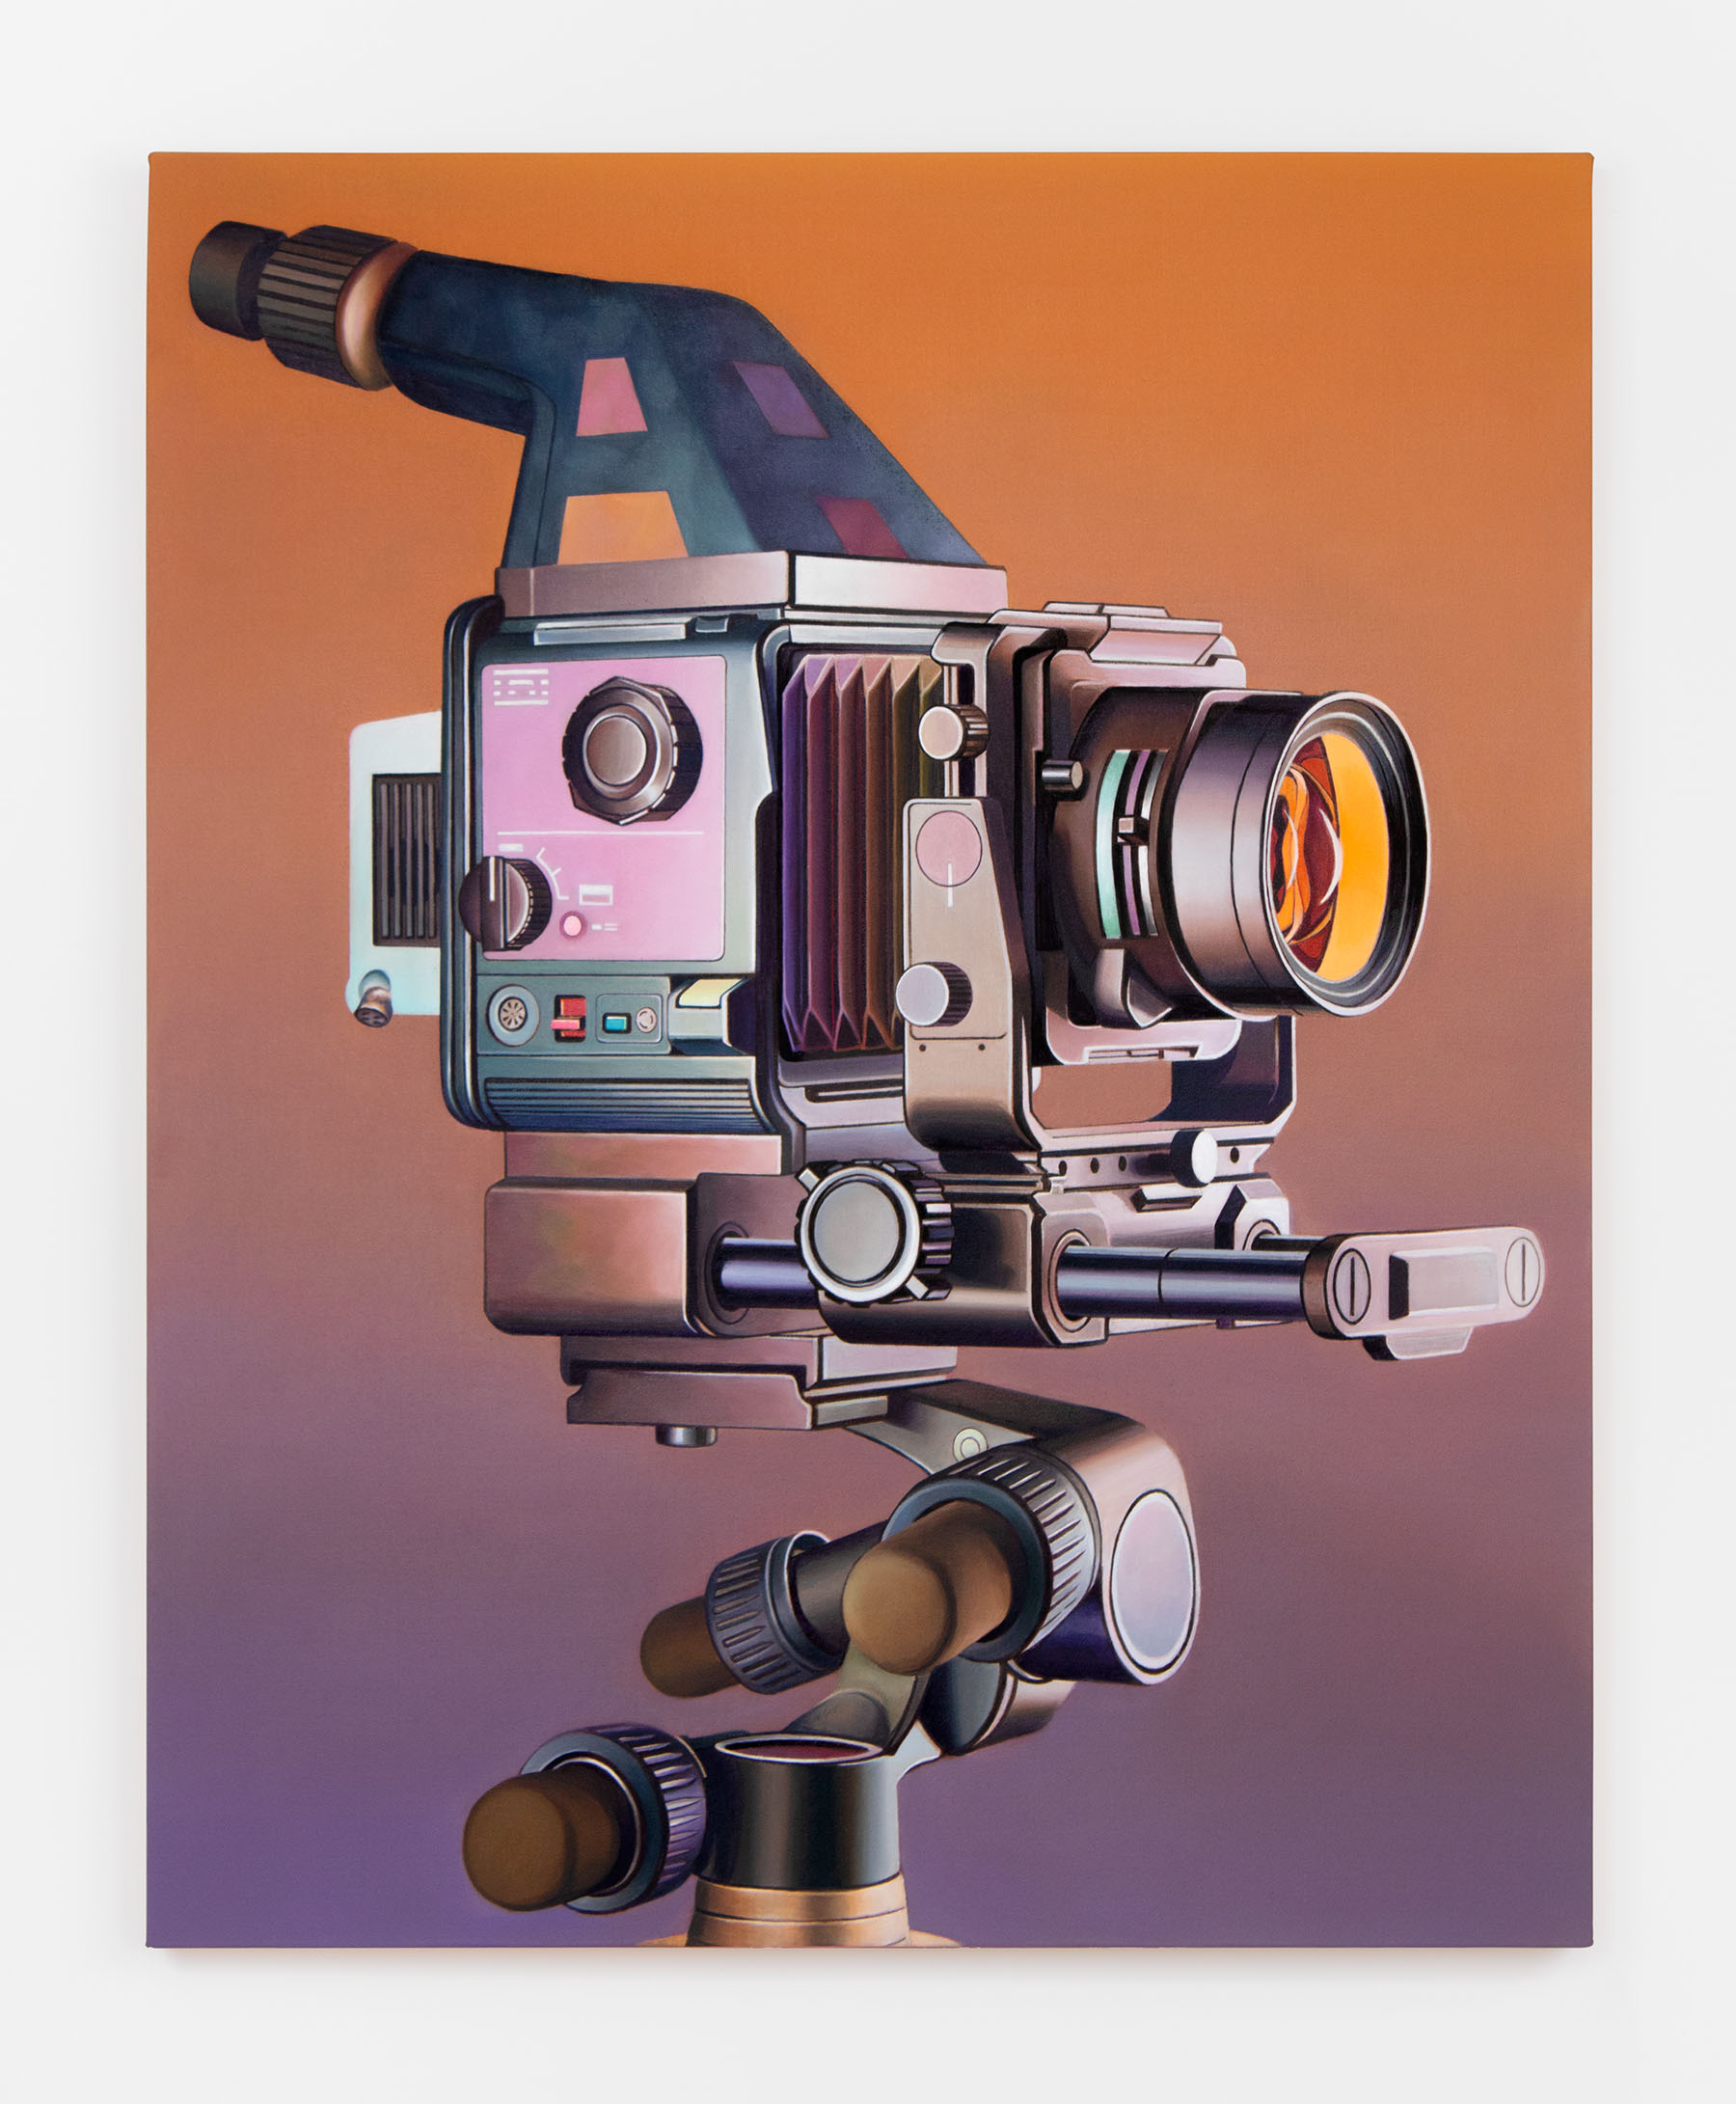 Chason Matthams, Untitled (Fuji GX680, orange/purple), 2022, Oil on linen over panel, 36 x 29 in.